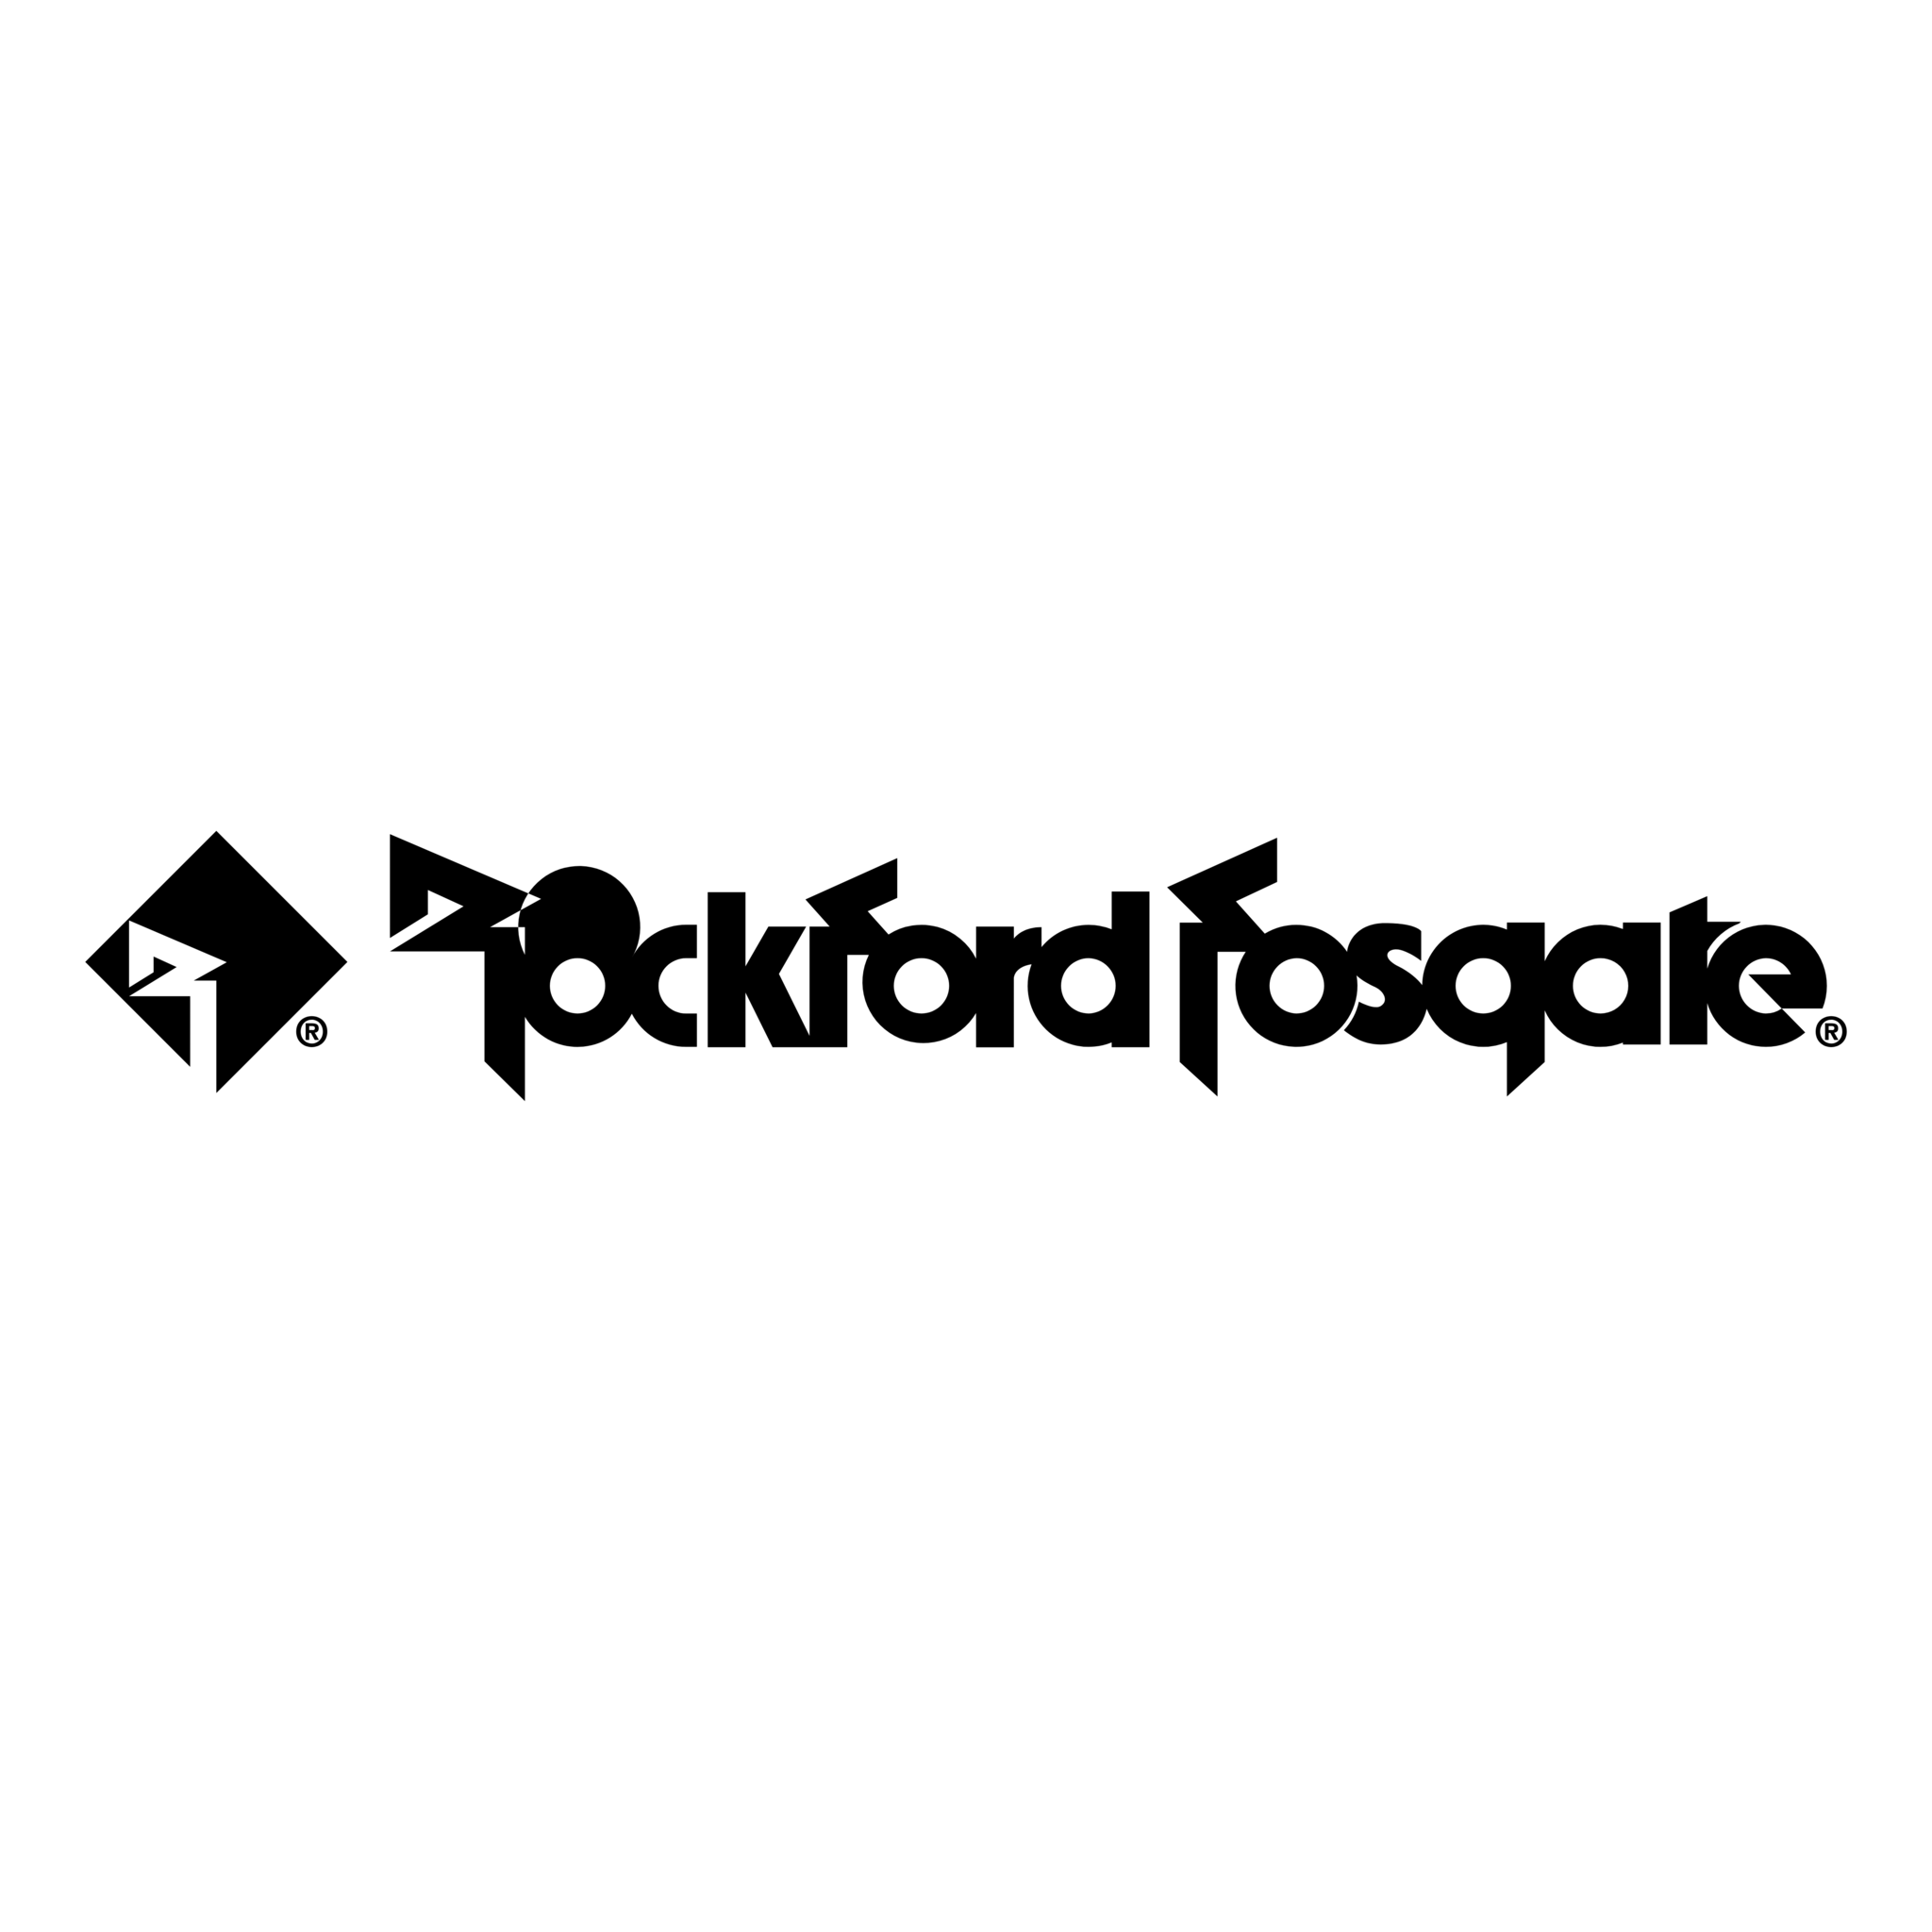 Rockford_Fosgate_logo_r.png